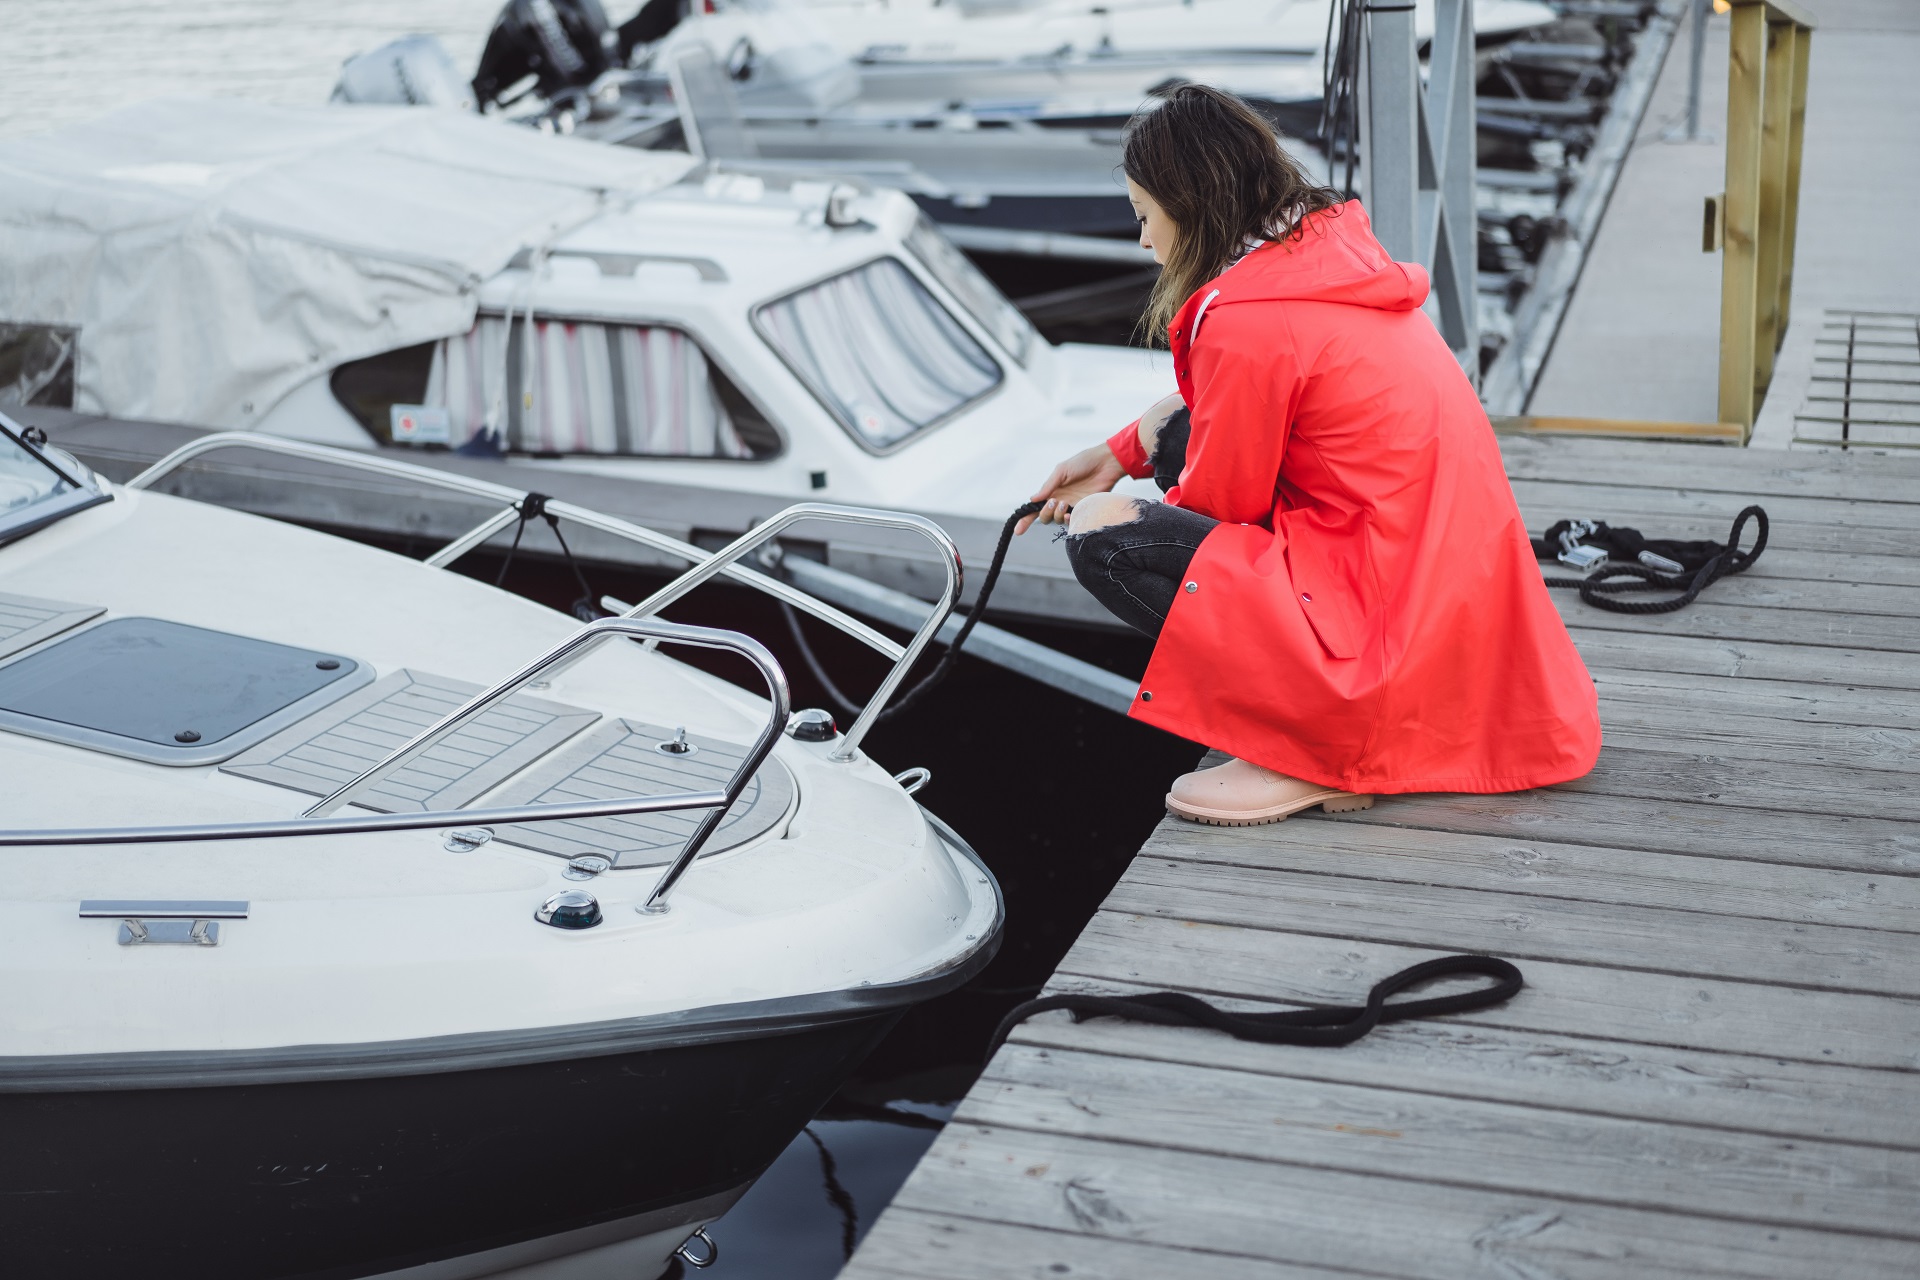 Cordelia Yachting: Pioneering a New Era in Shore Maintenance